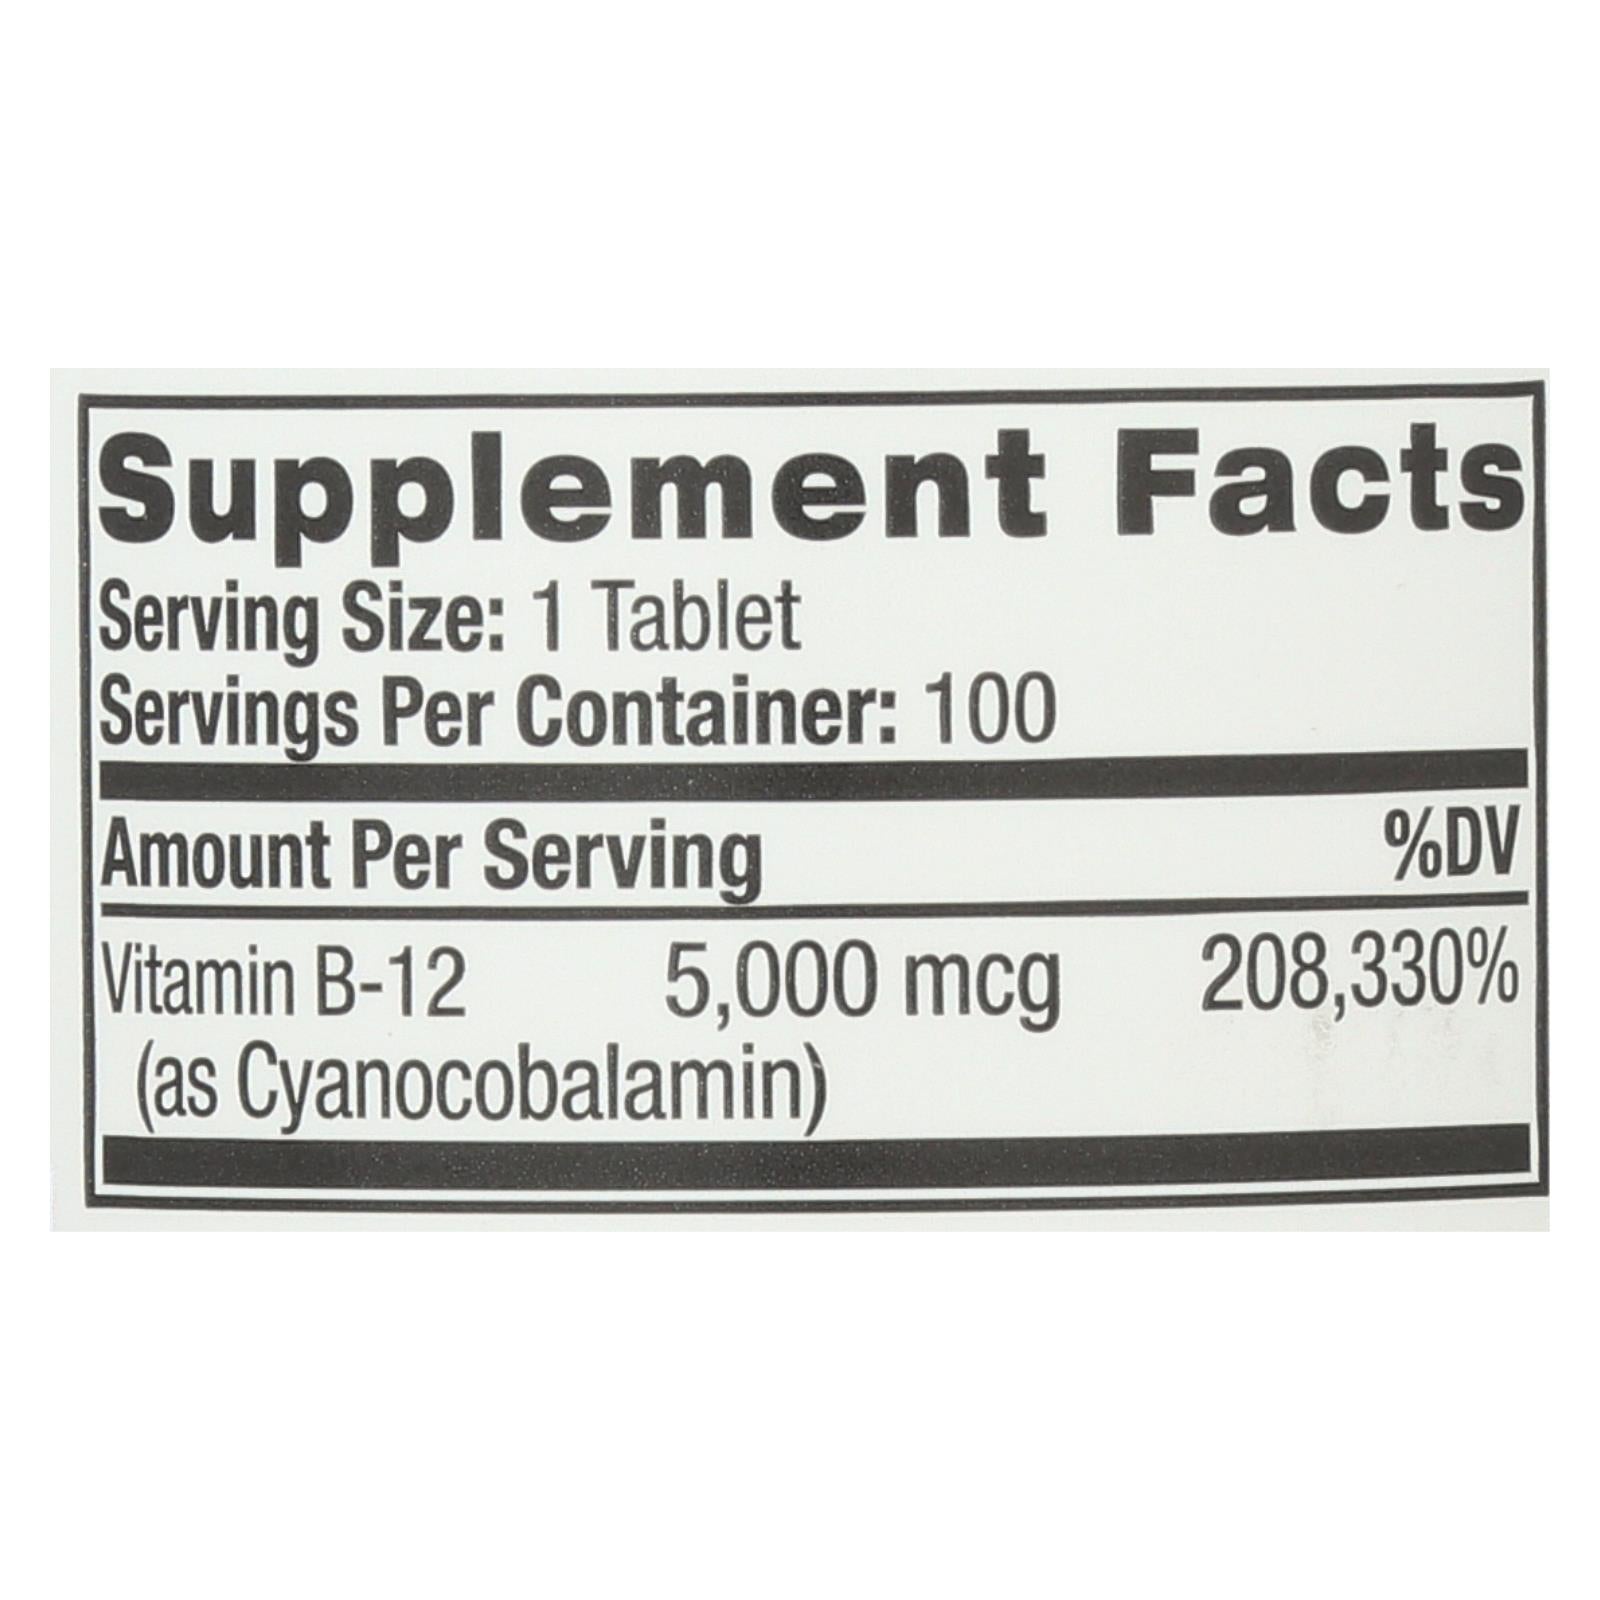 Natrol Fast Dissolving Vitamin B12 - 5000 Mcg - 100 Tabs